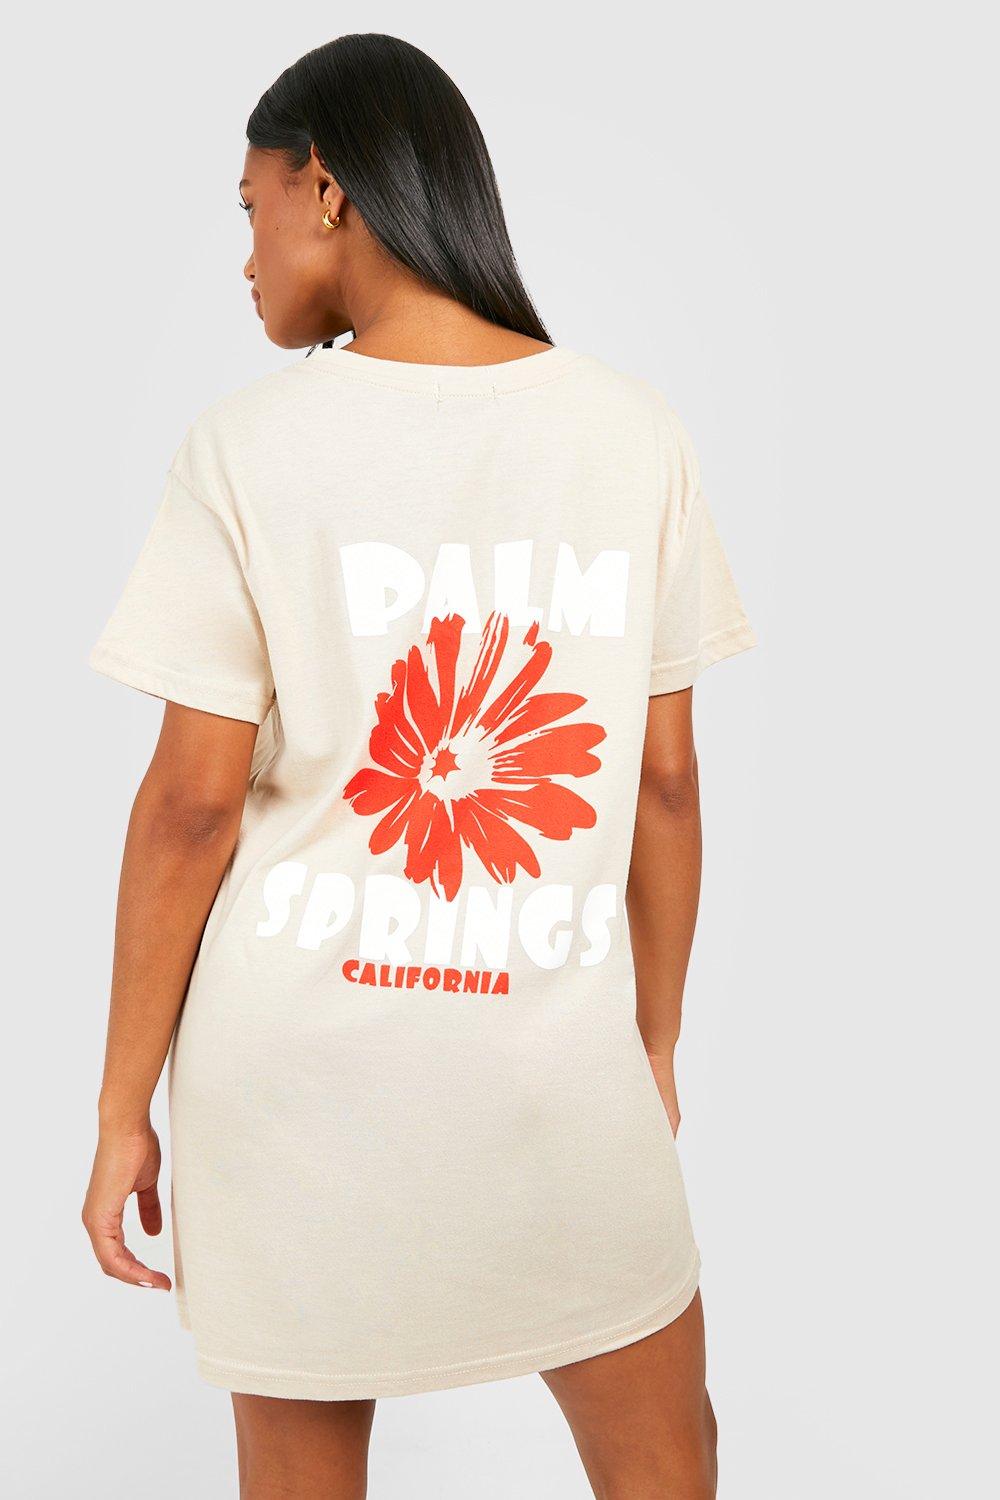 boohoo California T-Shirt Dress - Beige - Size 12